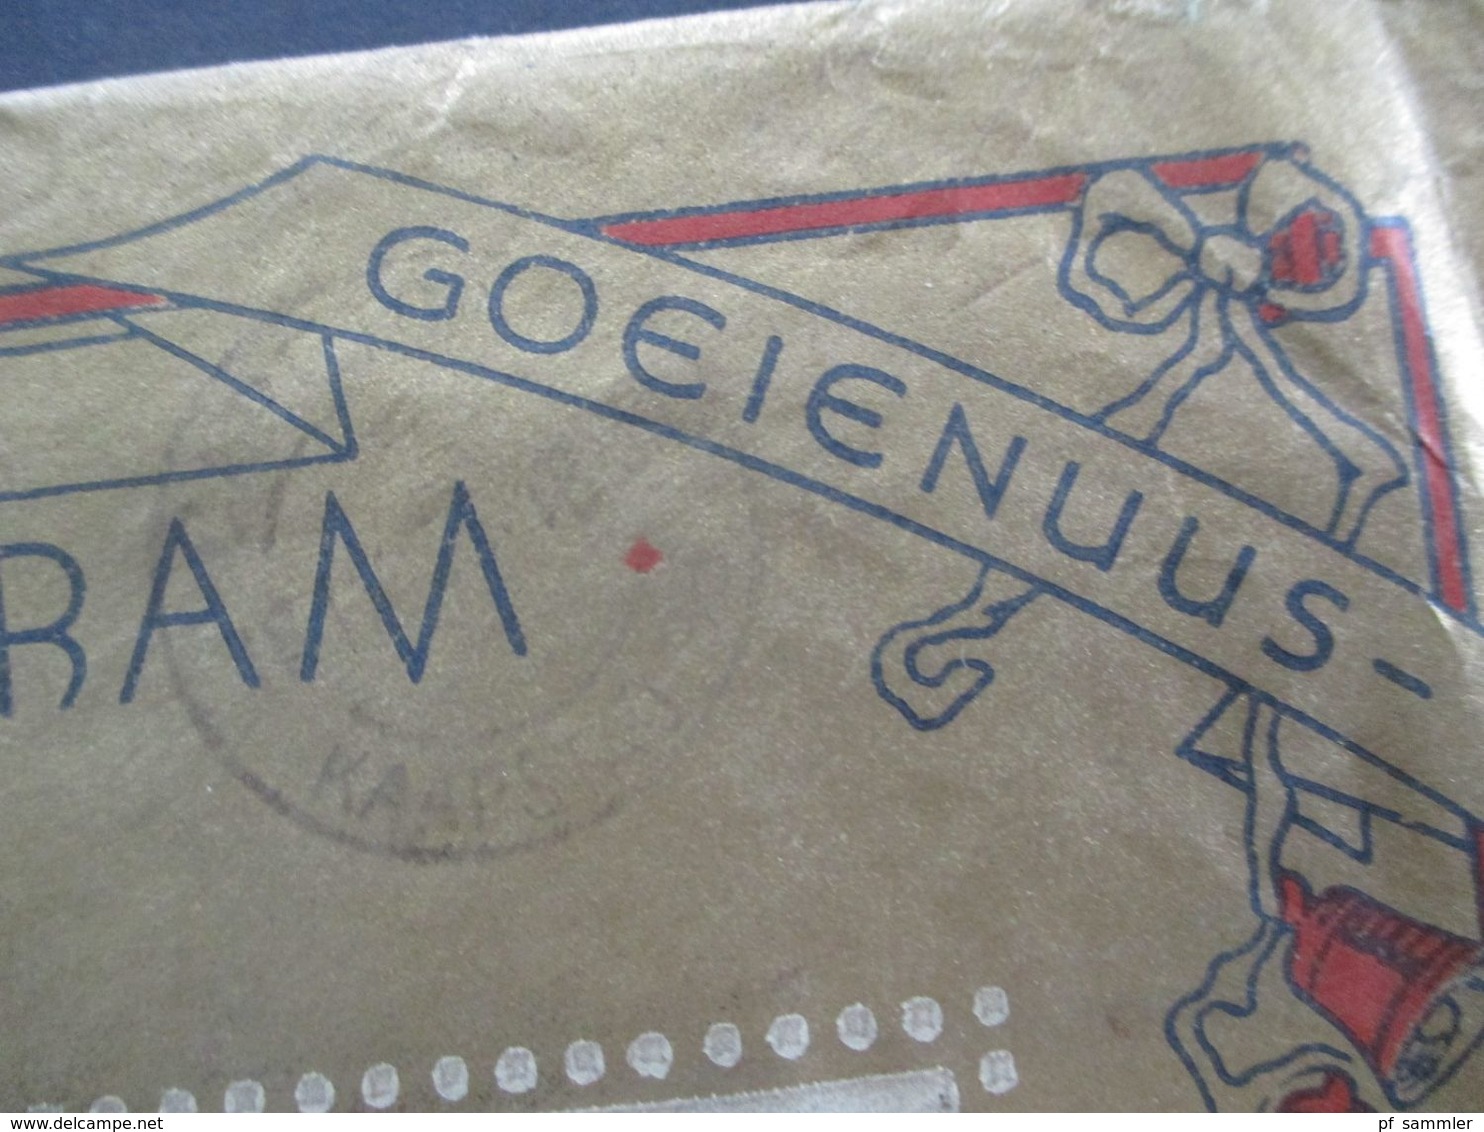 Südafrika Um 1930 ?! Telegram Goldener Umschlag Good News / Goeienuus An Das Parliament Capetown - Cartas